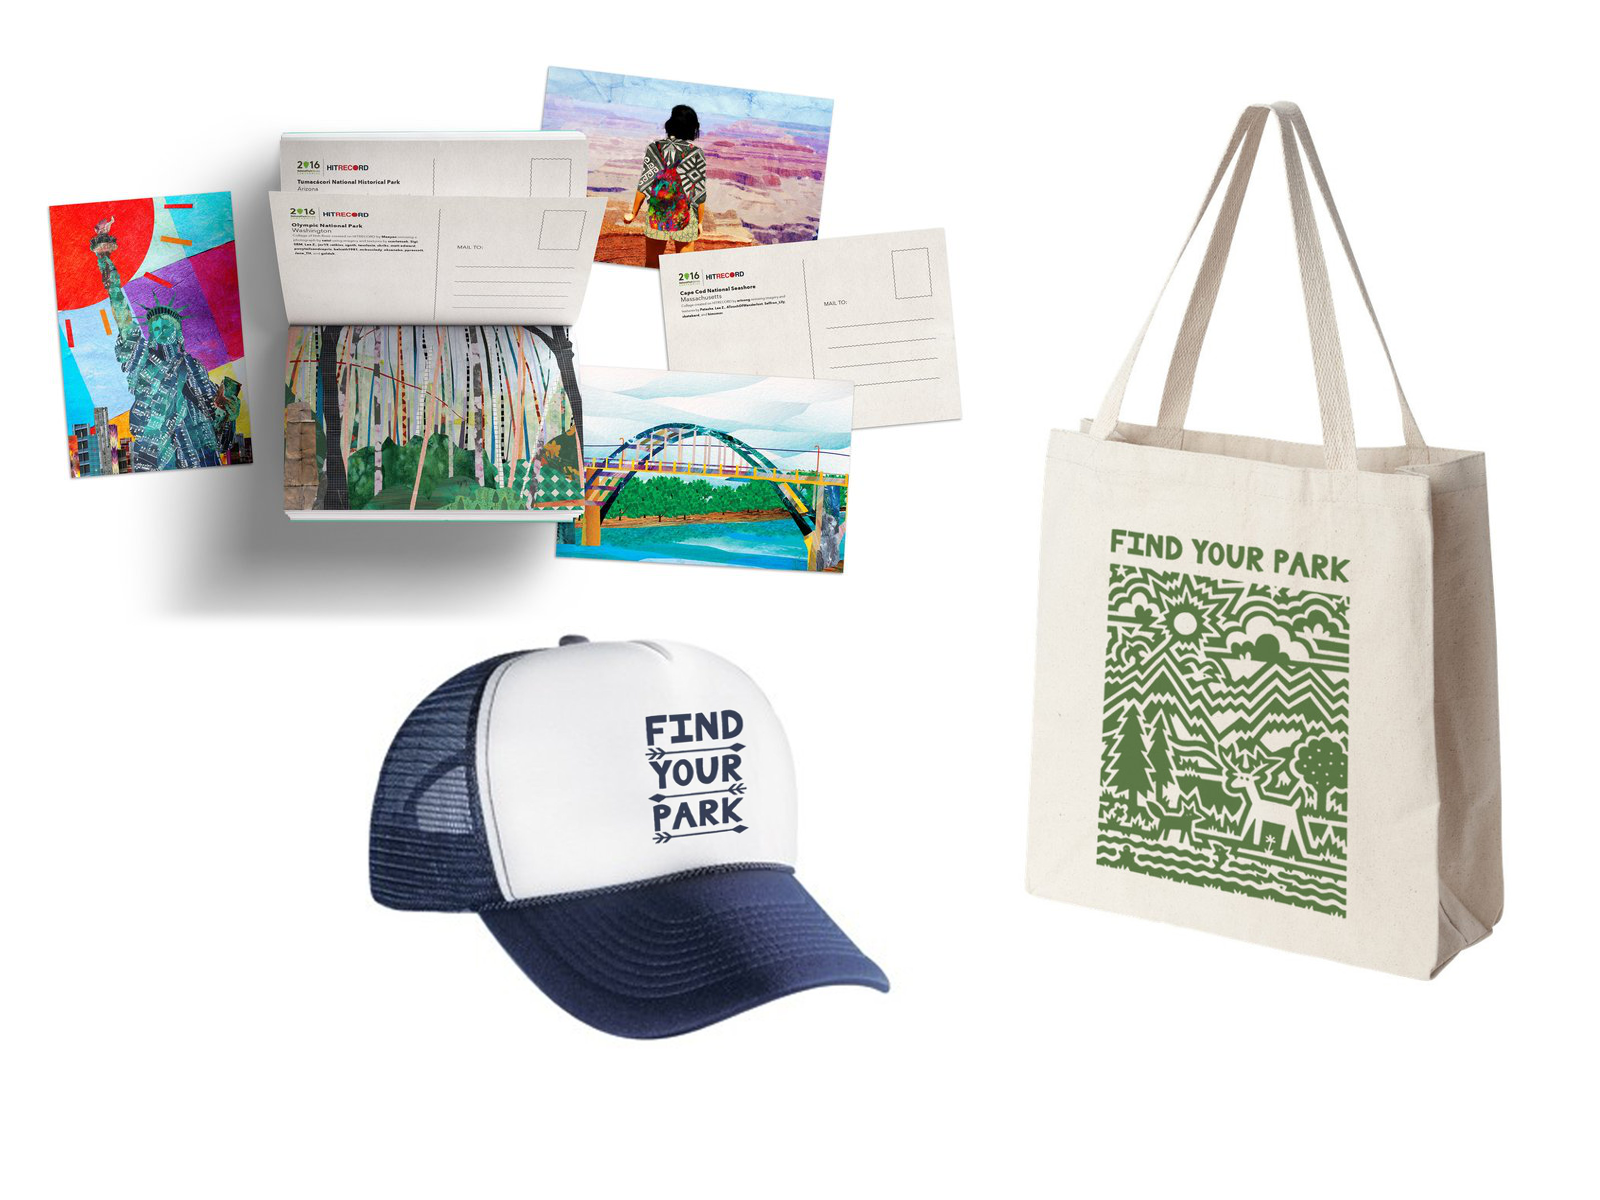 postcards, ballcap, and tote bag